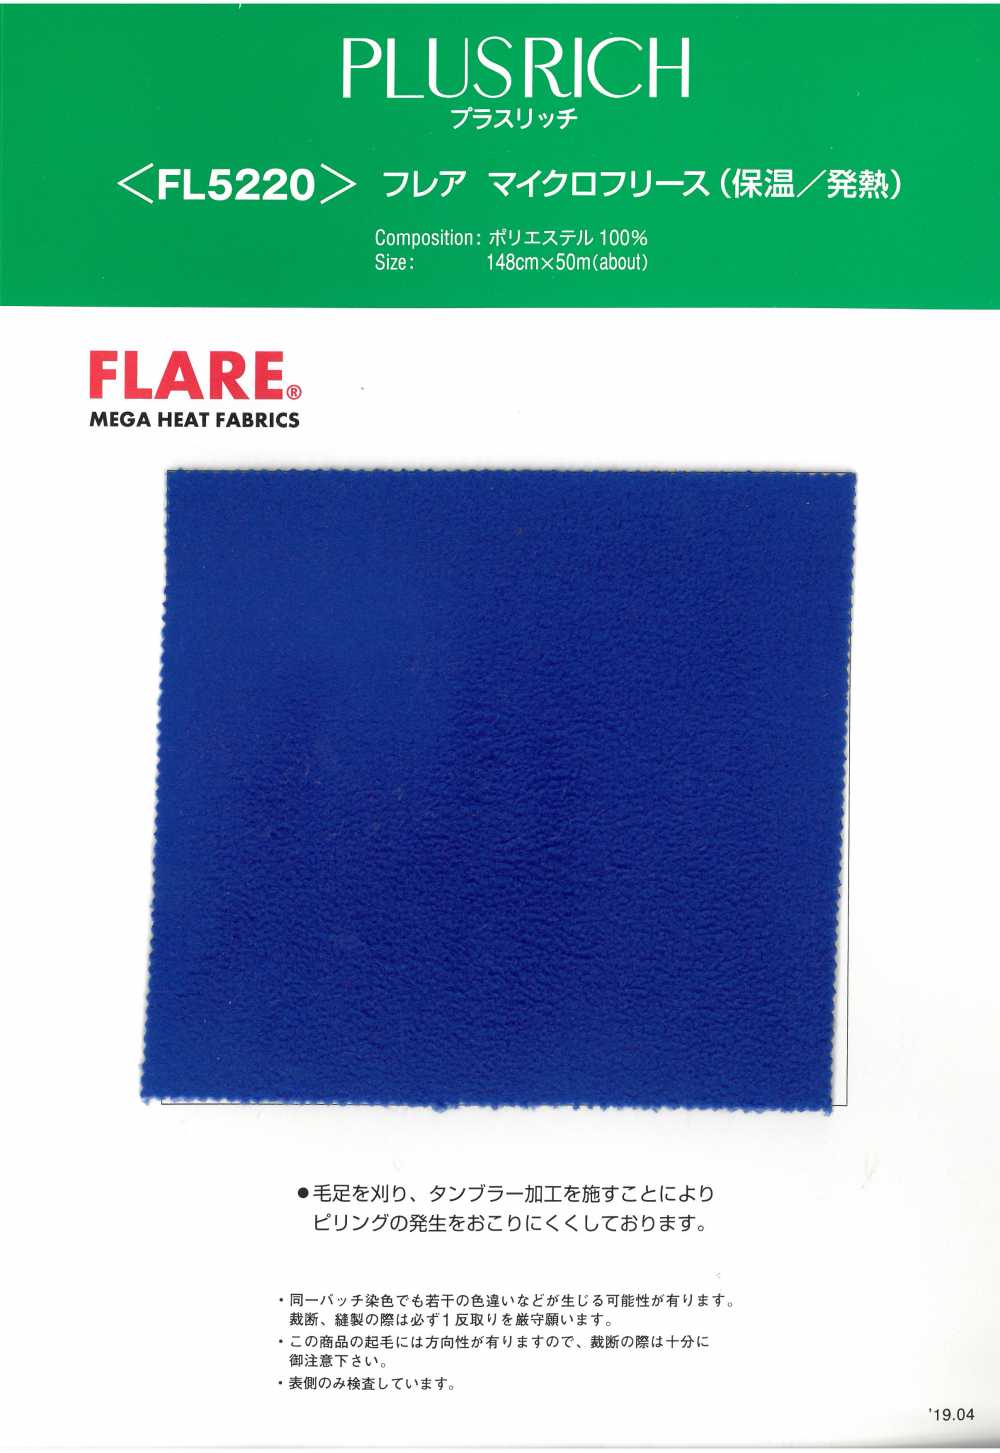 FL5220 FLARE® 플리스(보온 / 발열)[원단]